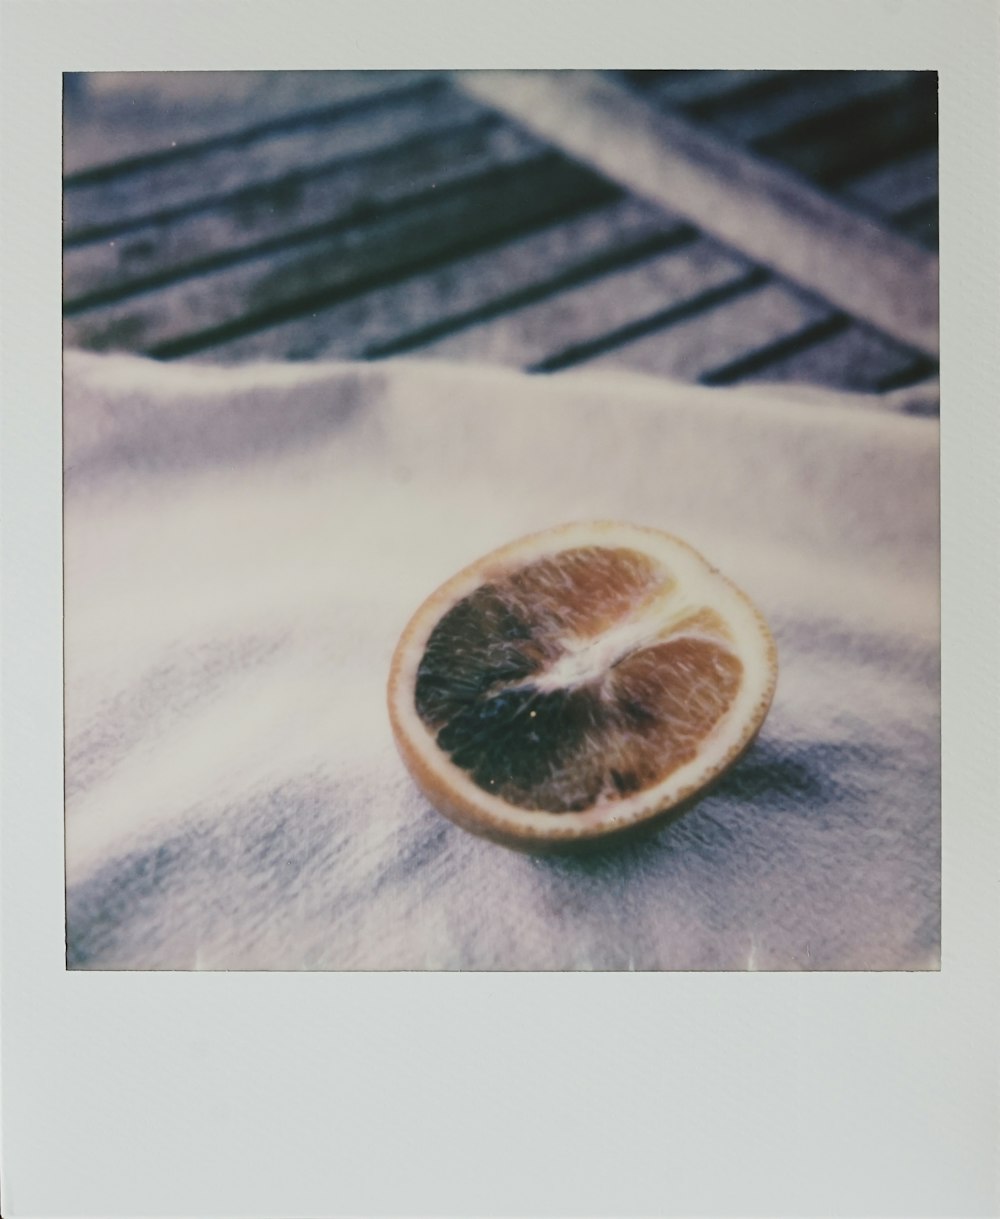 limone a fette su tessuto bianco